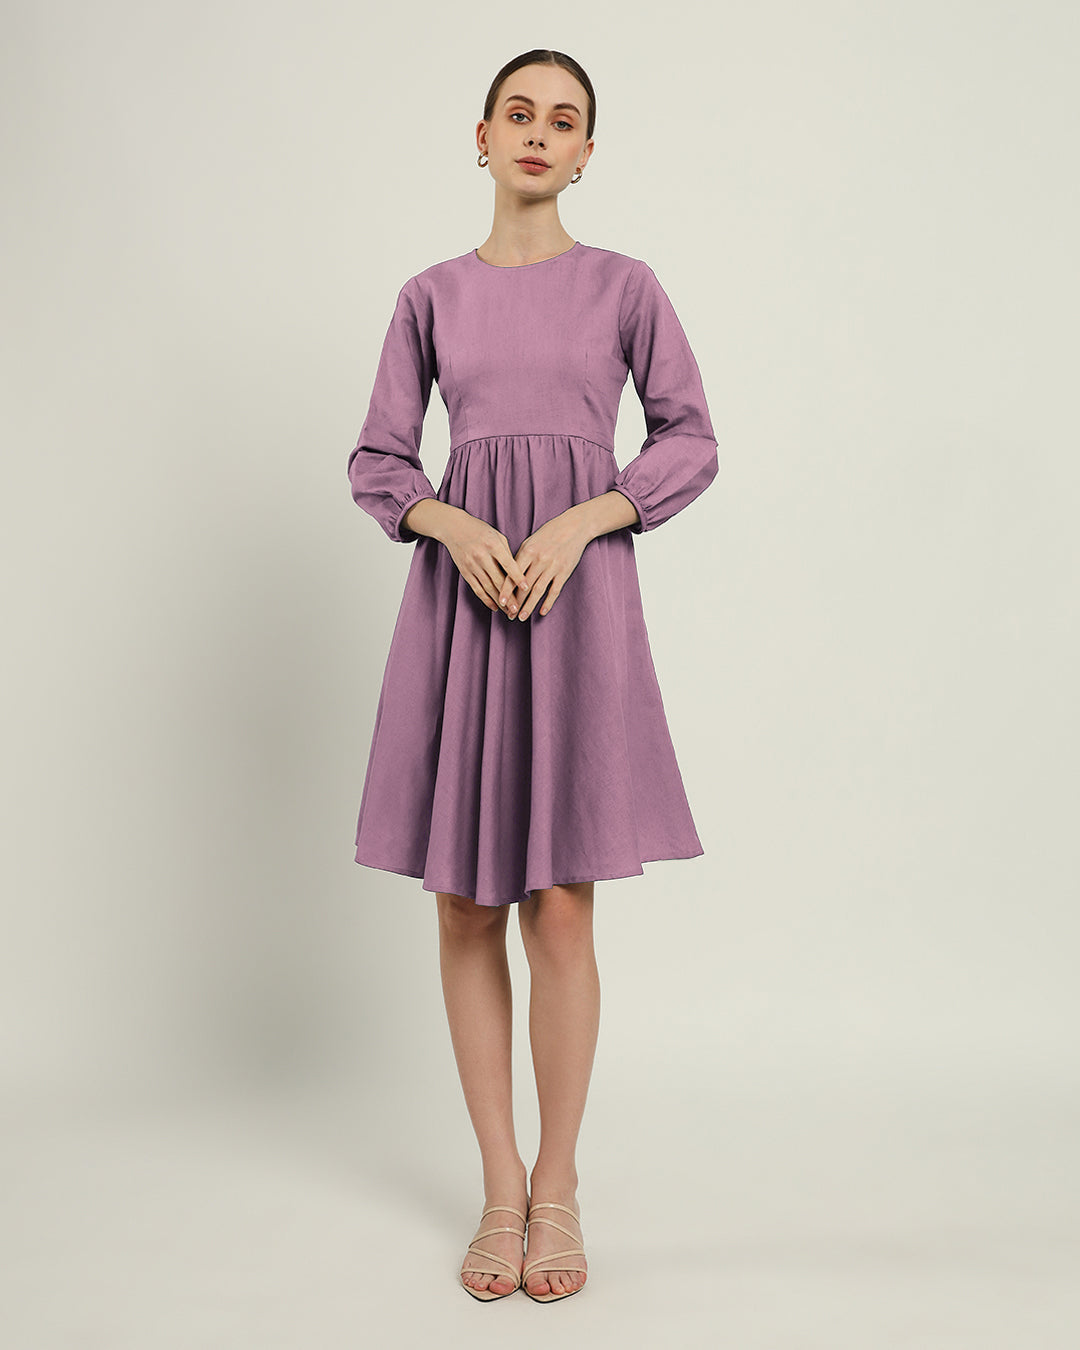 The Exeter Purple Swirl Cotton Dress